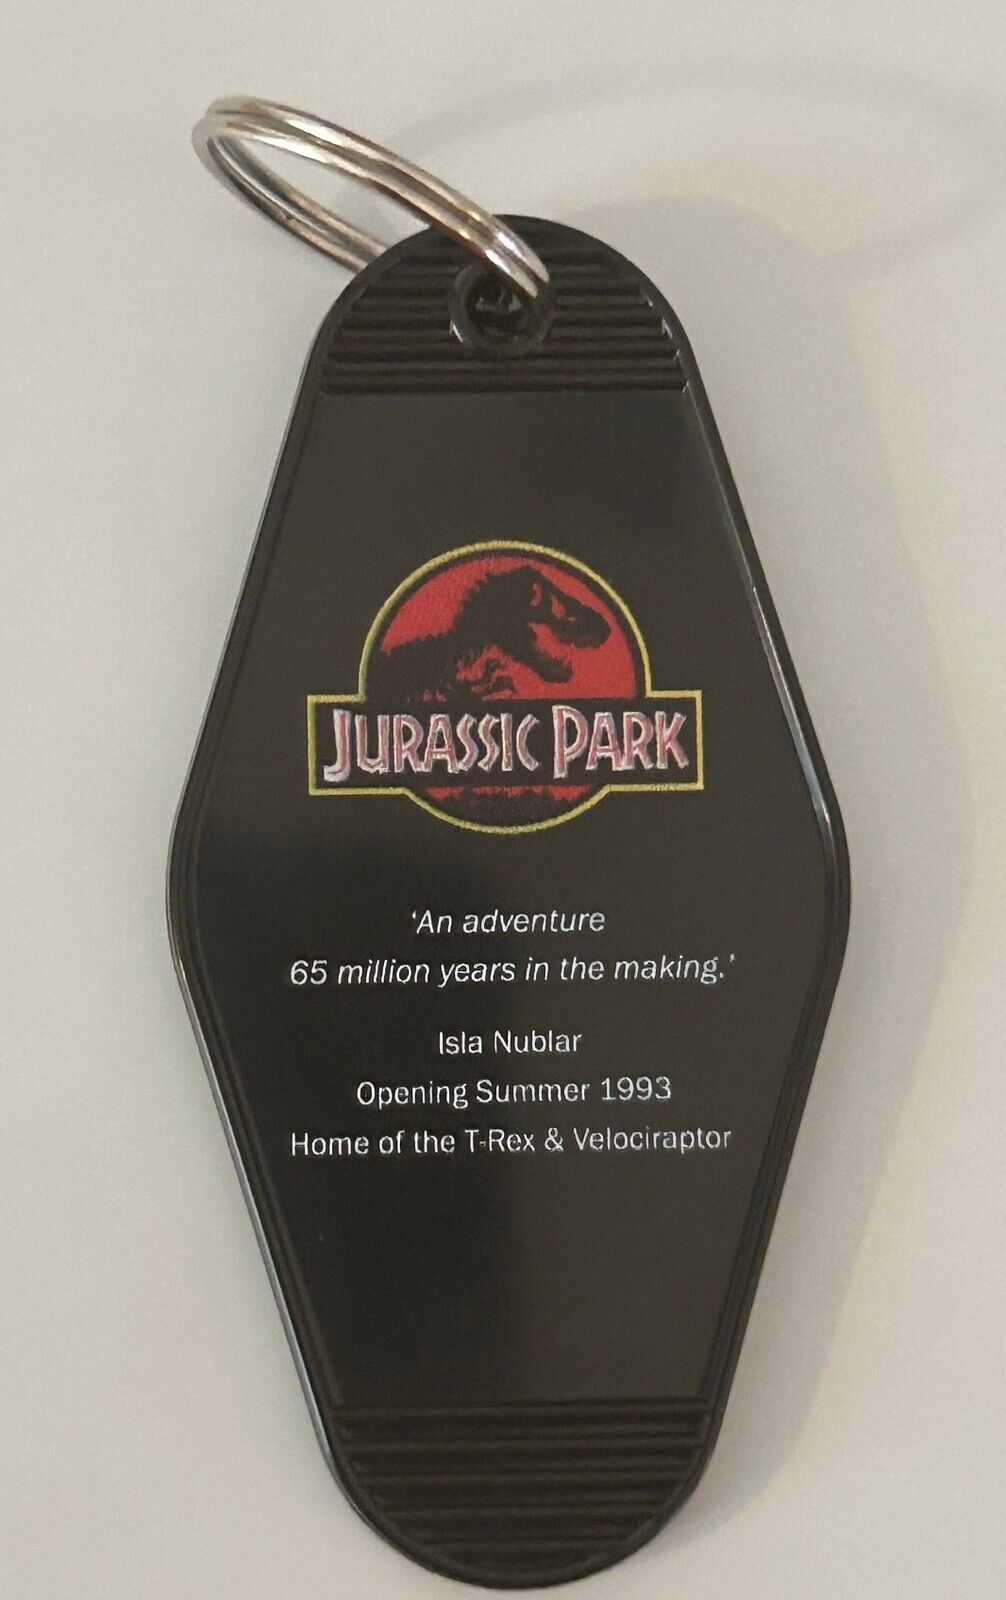 Jurassic Park inspired movie keytag